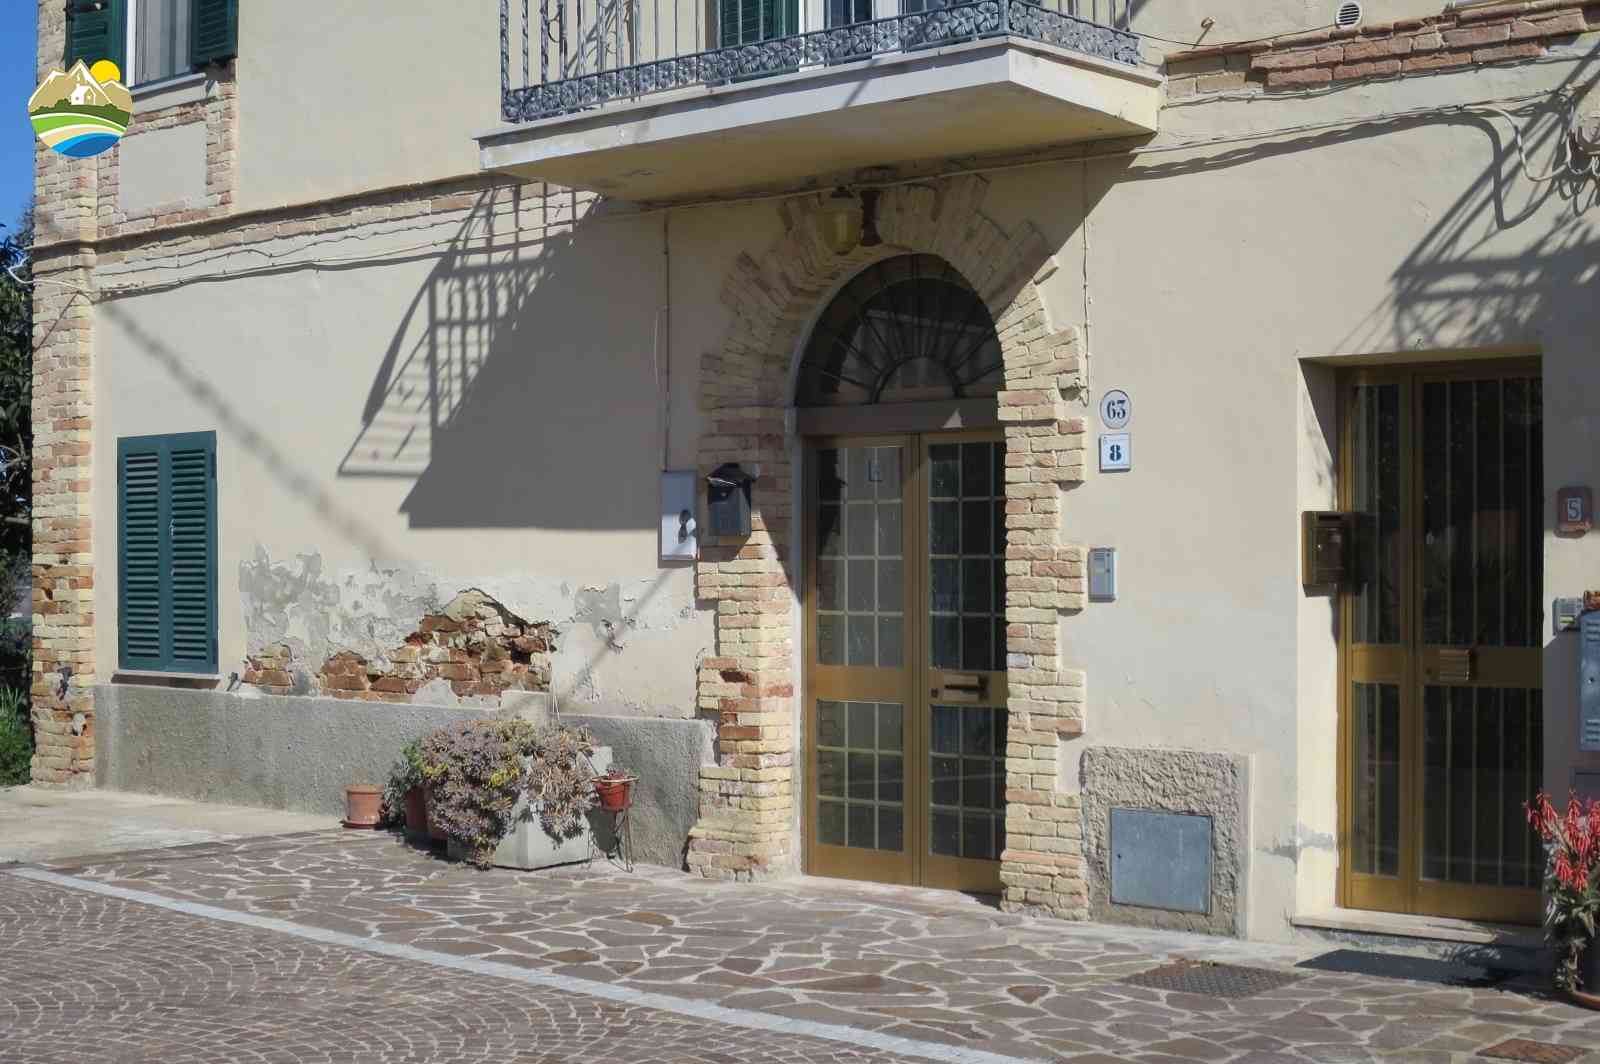 Townhouse Townhouse for sale Picciano (PE), Casa Rondine - Picciano - EUR 87.757 780